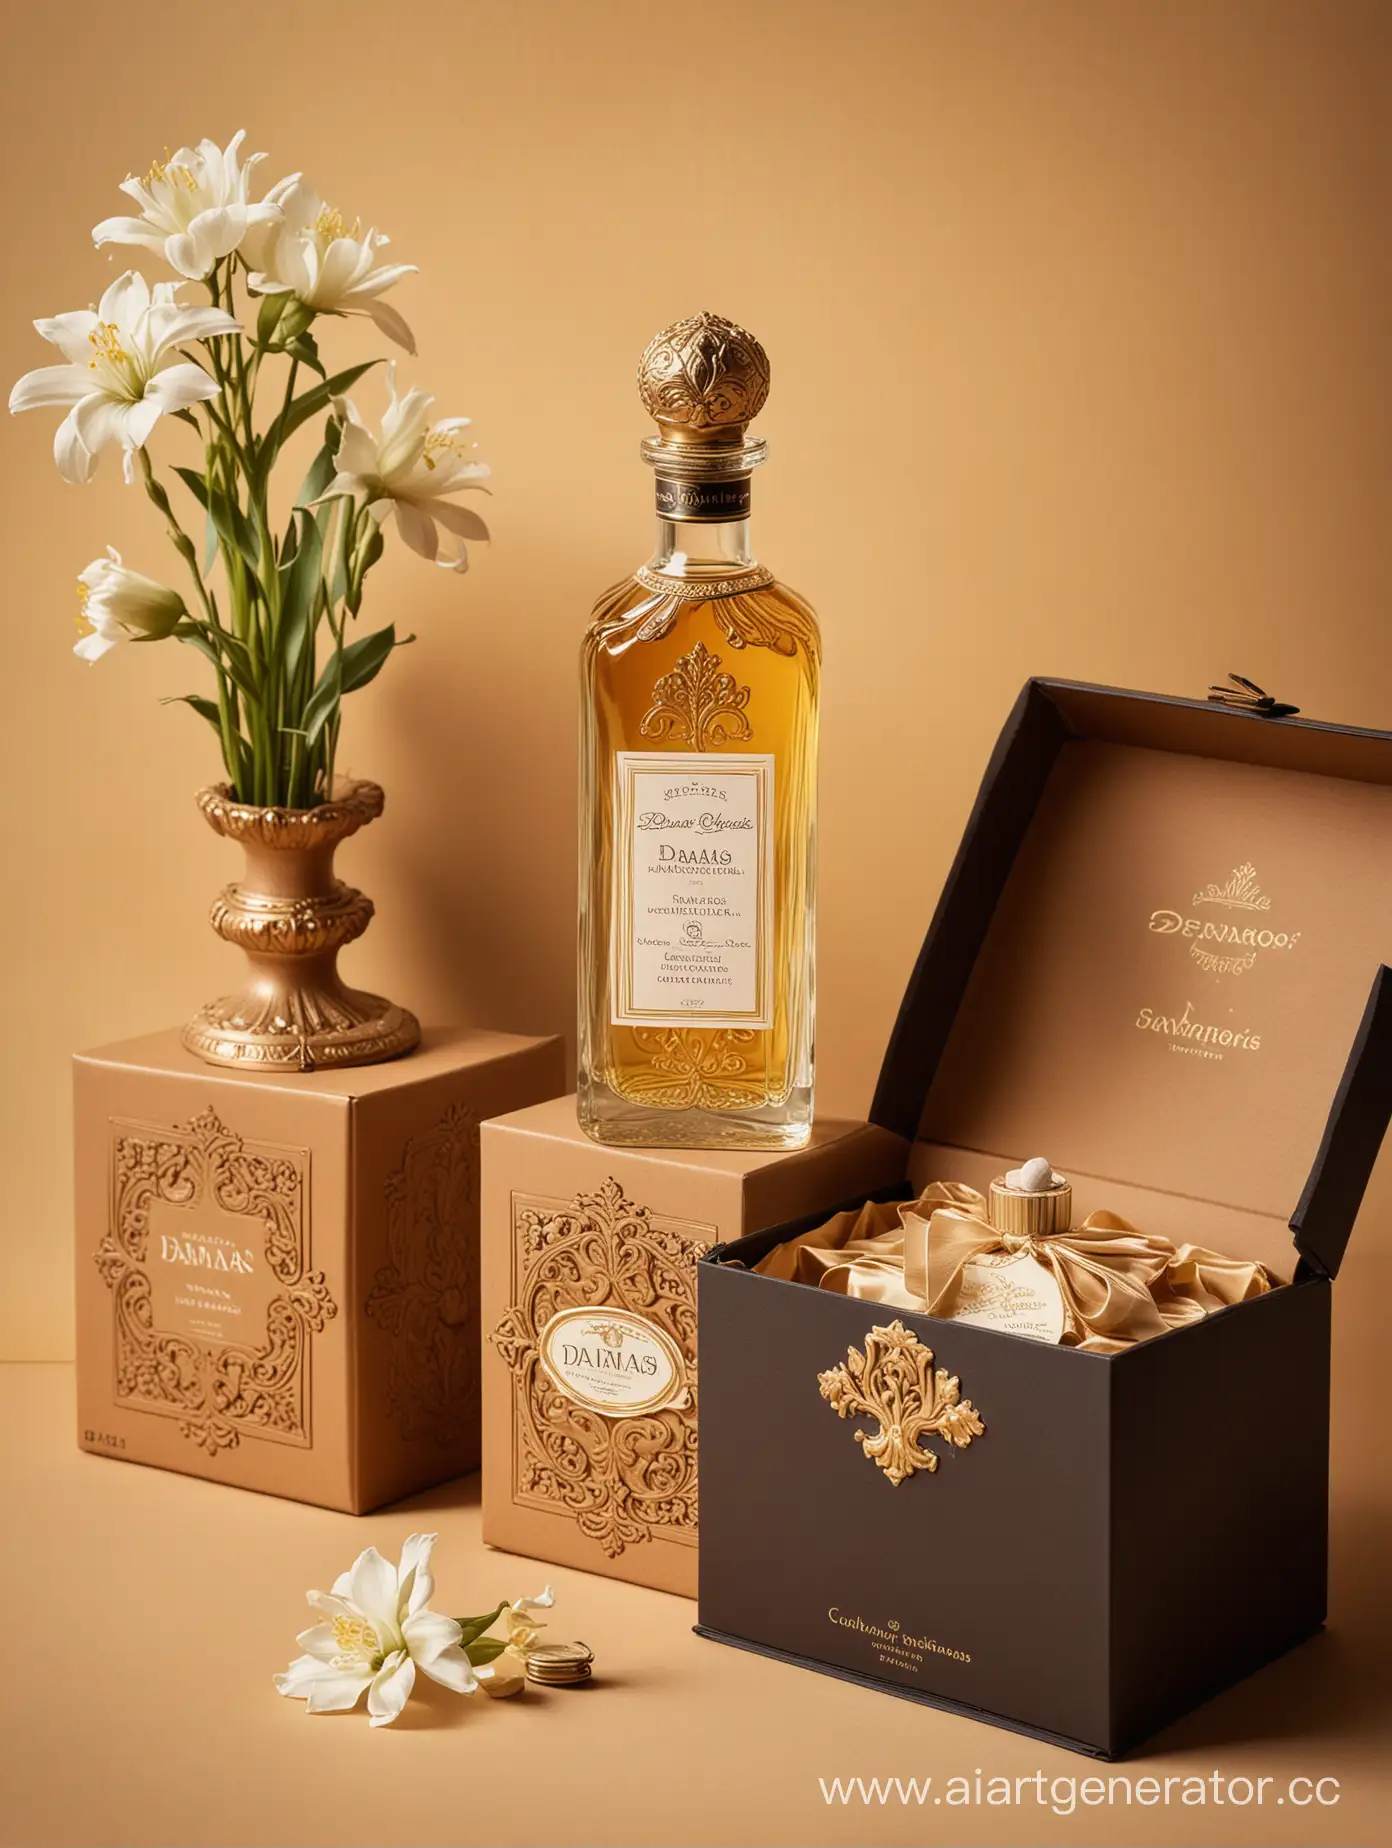 a bottle of damas cologne sitting next to a box, a flemish Baroque by Demetrios Farmakopoulos, instagram contest winner, dau-al-set, dynamic composition, contest winner, feminine
golden background